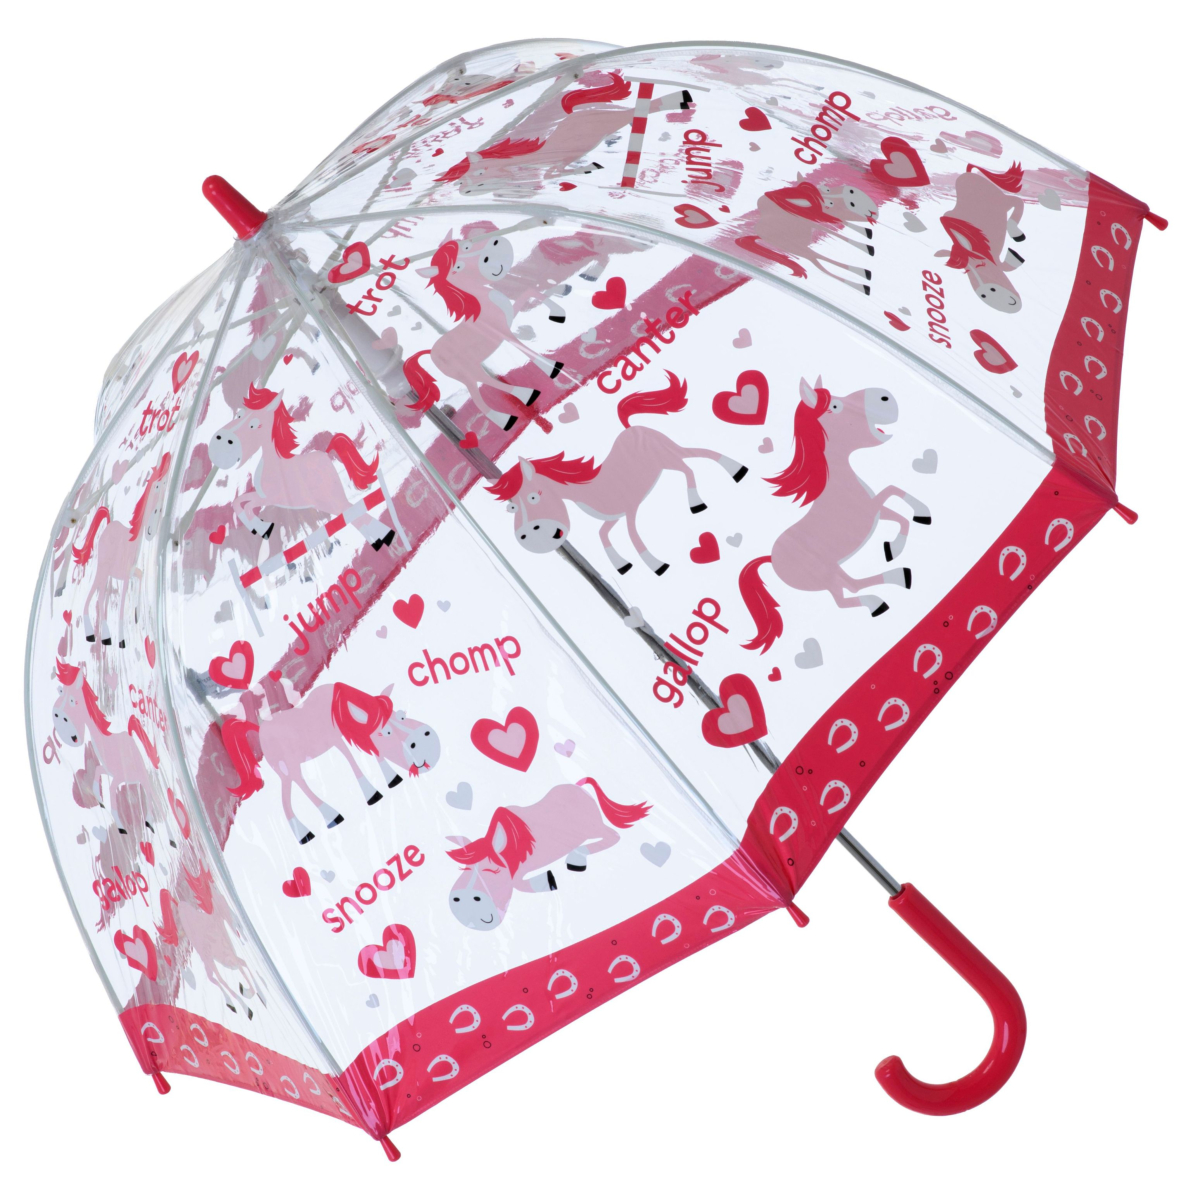 Bugzz PVC Dome Umbrella for Children (New Design) - Ponies and Hearts